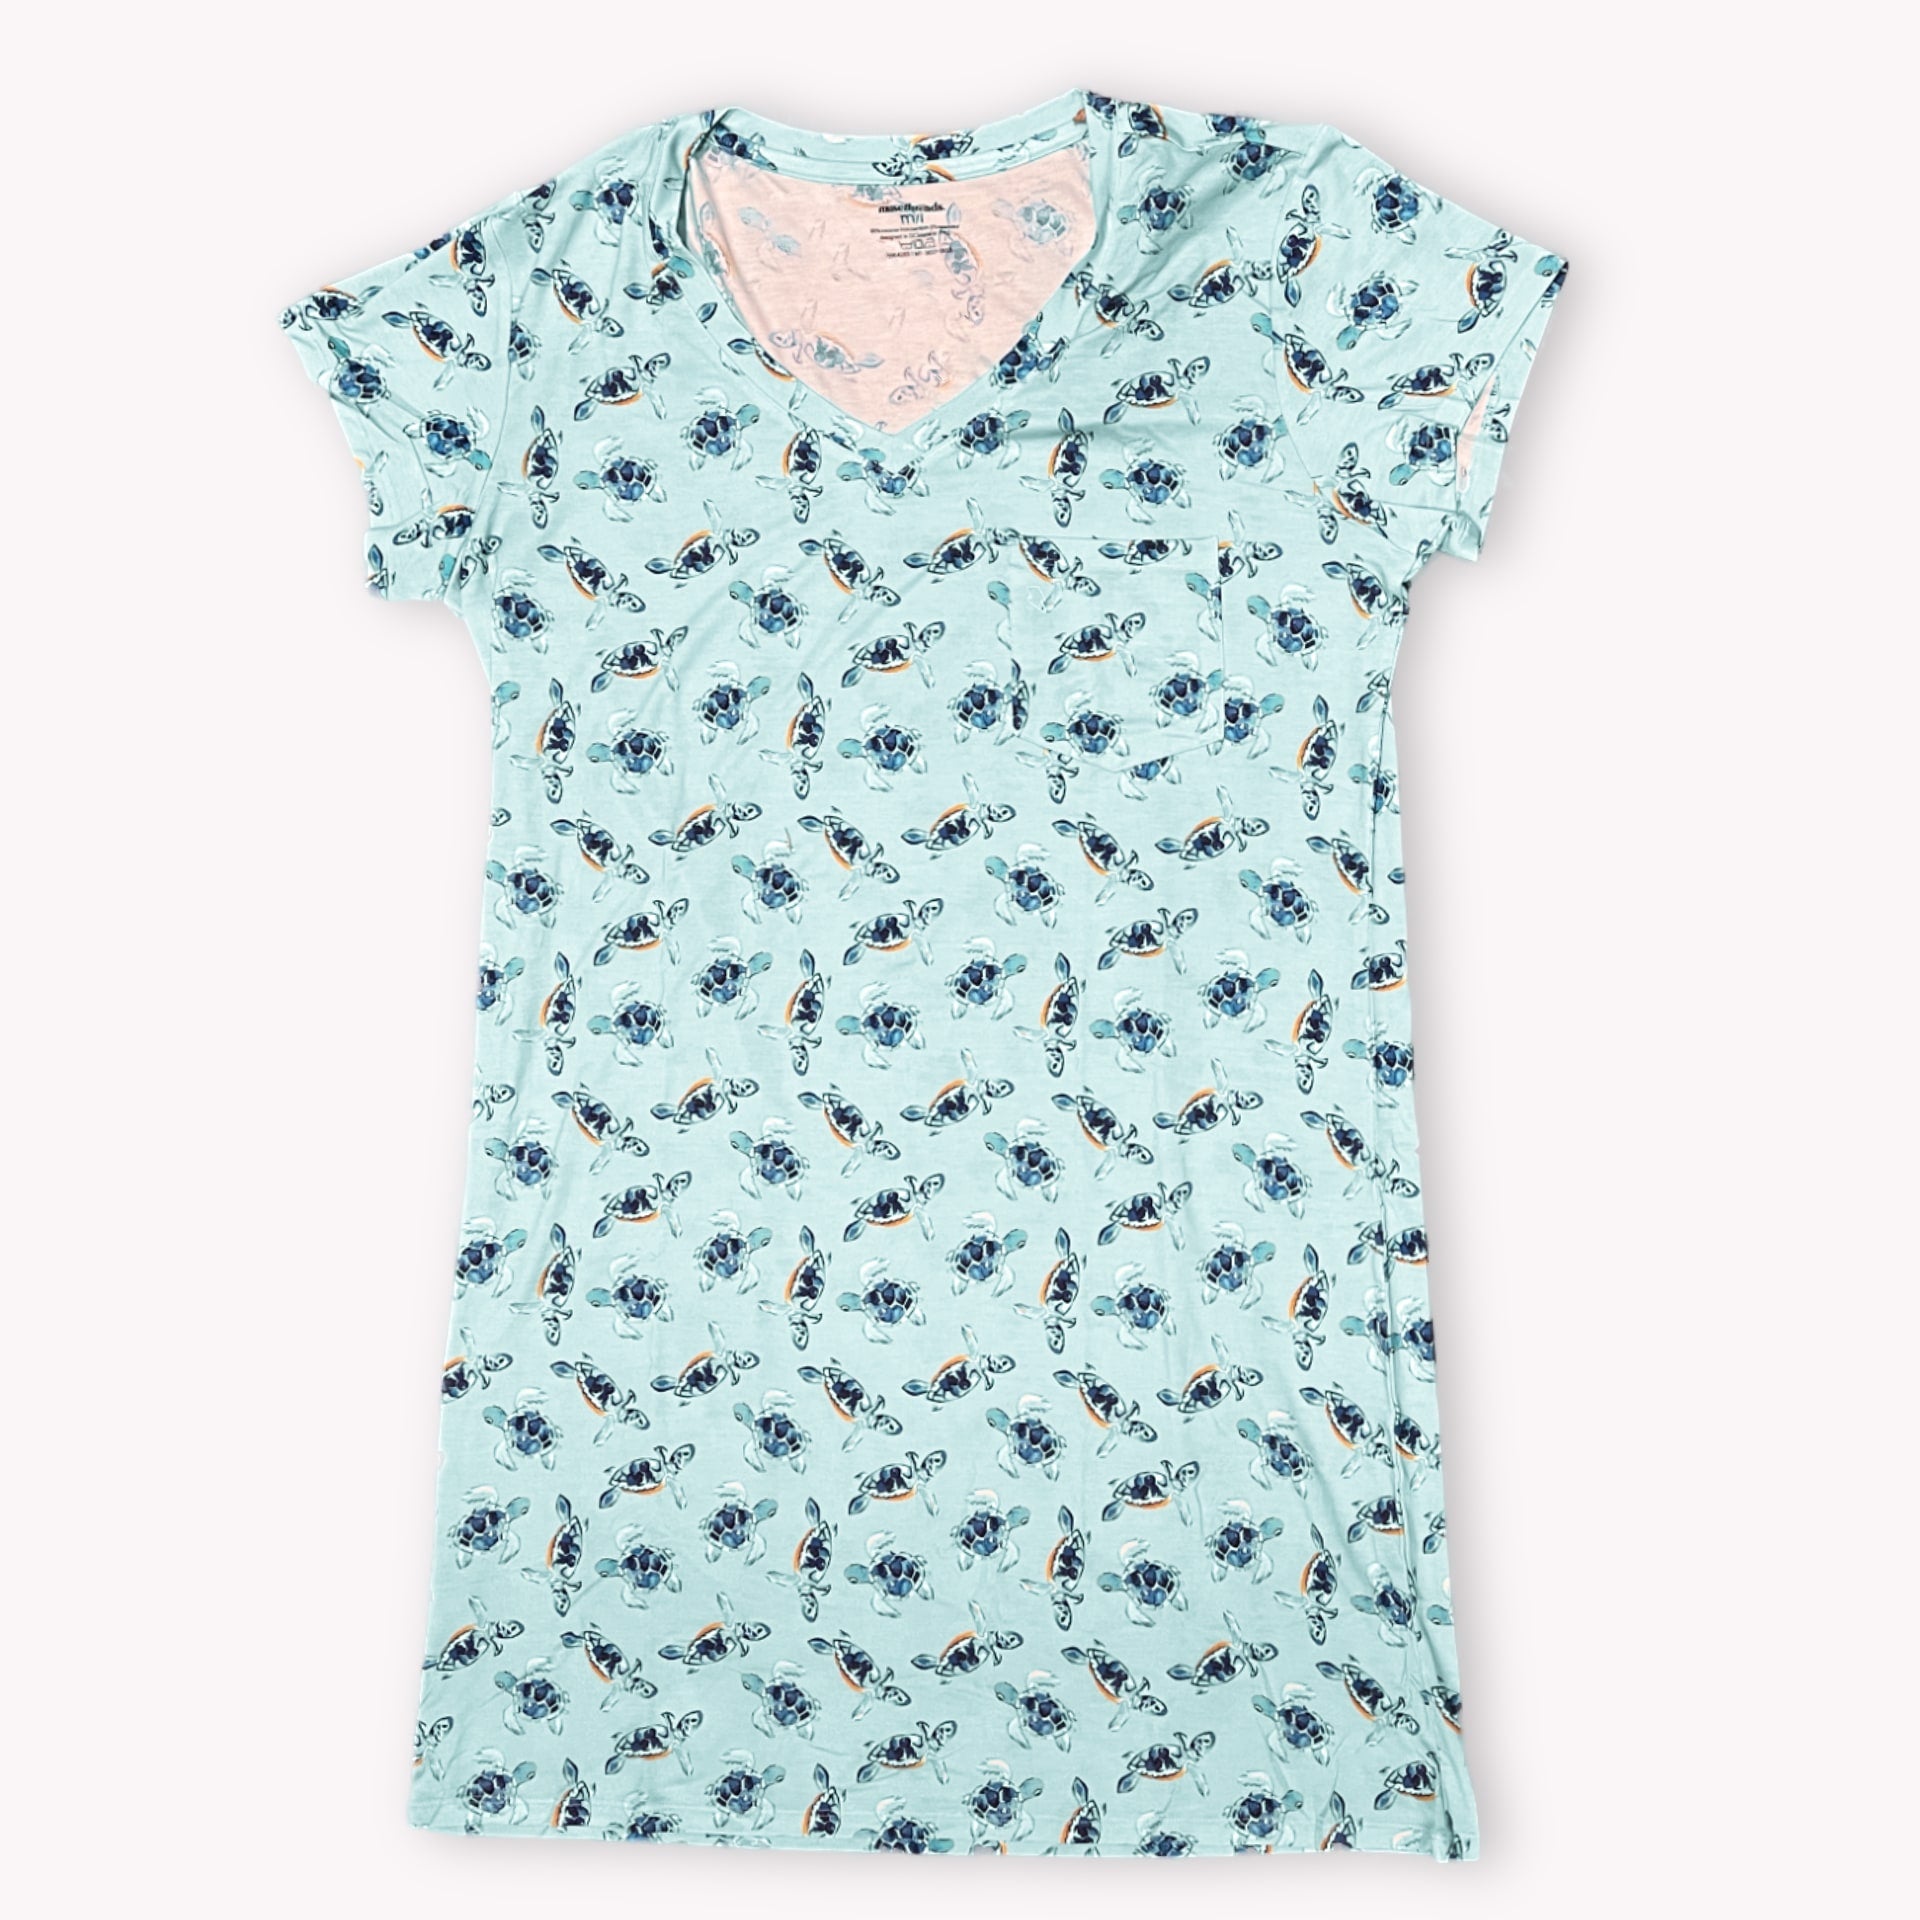 Baby Sea Turtles Women's T-Shirt Dress